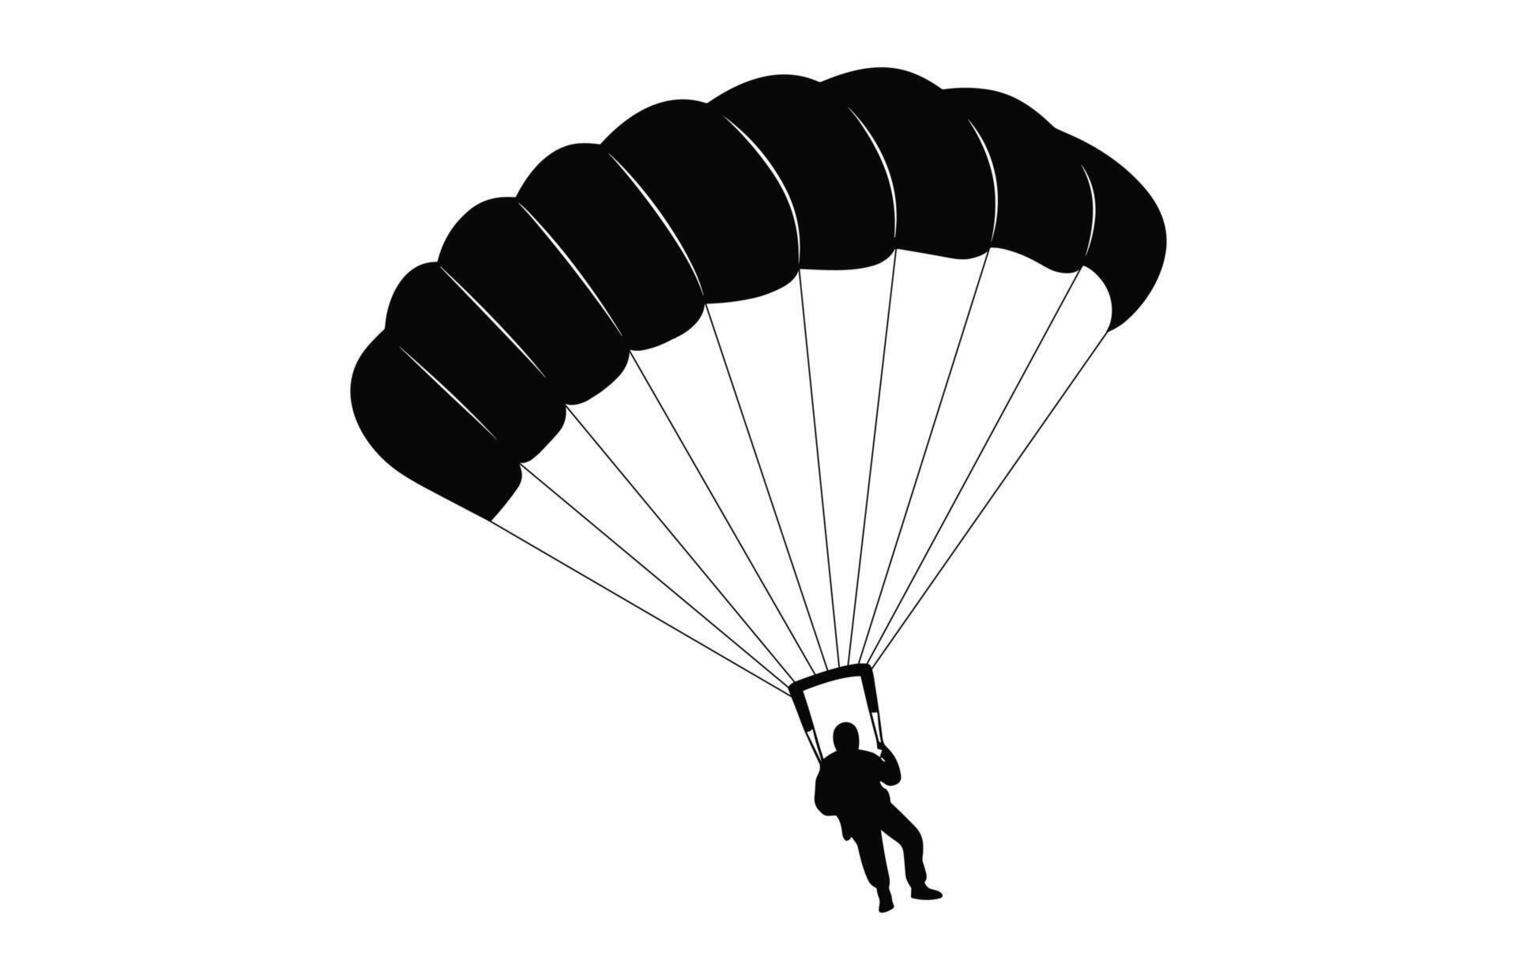 ski parachute glijden silhouet vector, paragliden parachute zwart clip art geïsoleerd Aan een wit achtergrond Aan een wit achtergrond vector